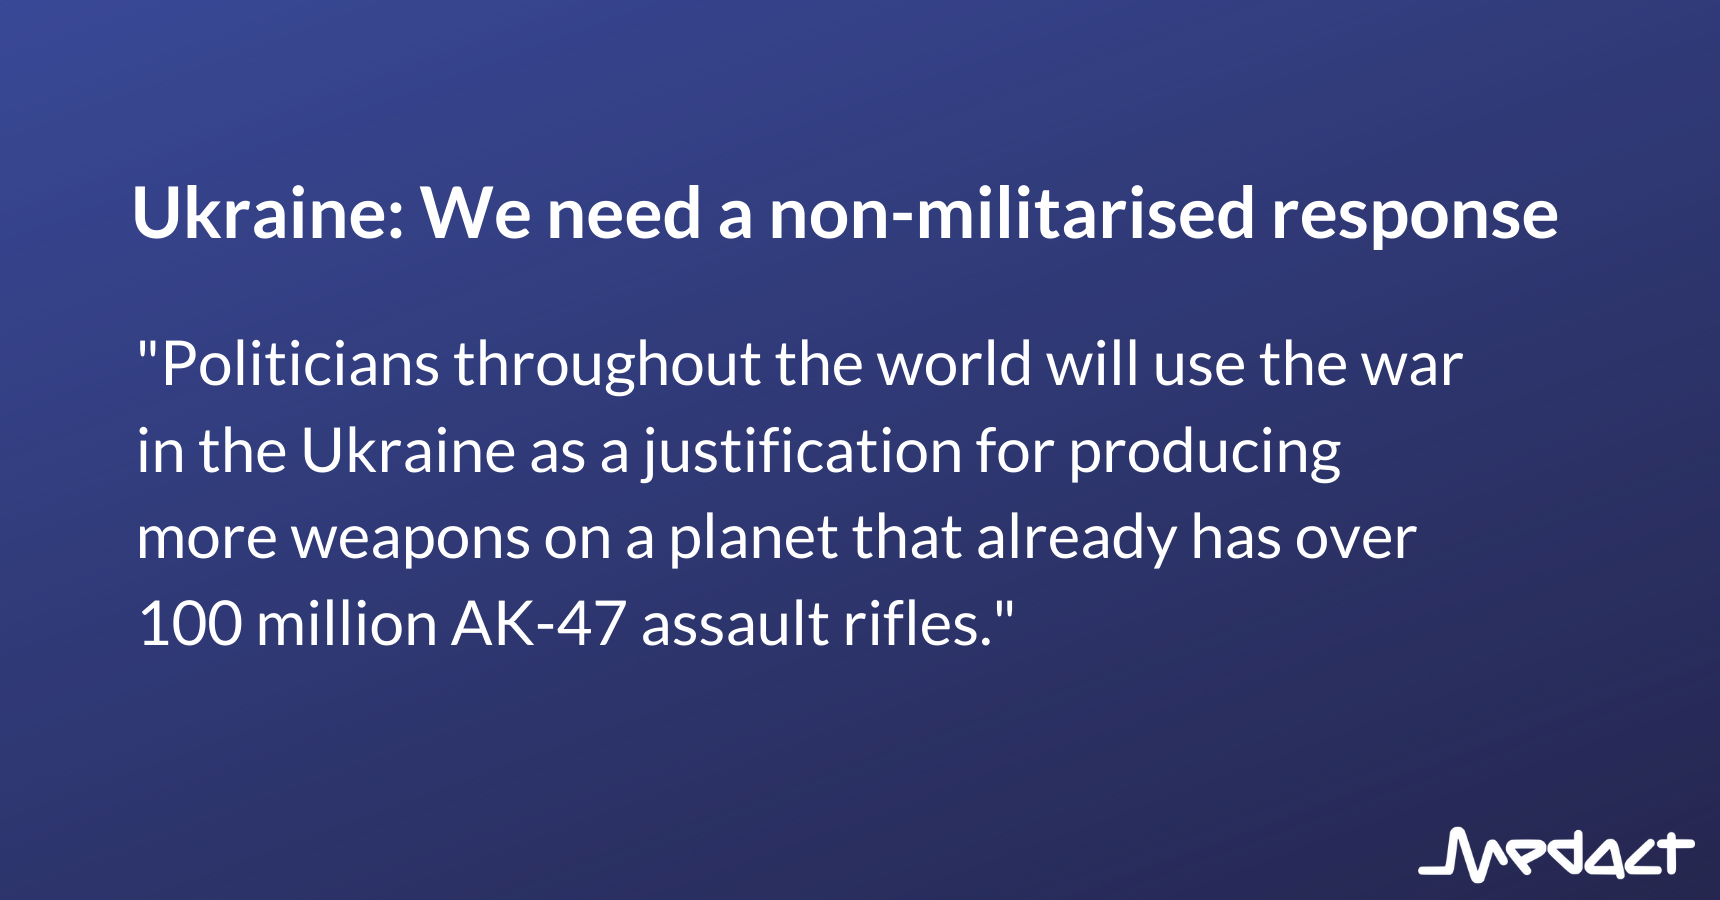 Russia’s invasion of Ukraine: We need a non-militarised response